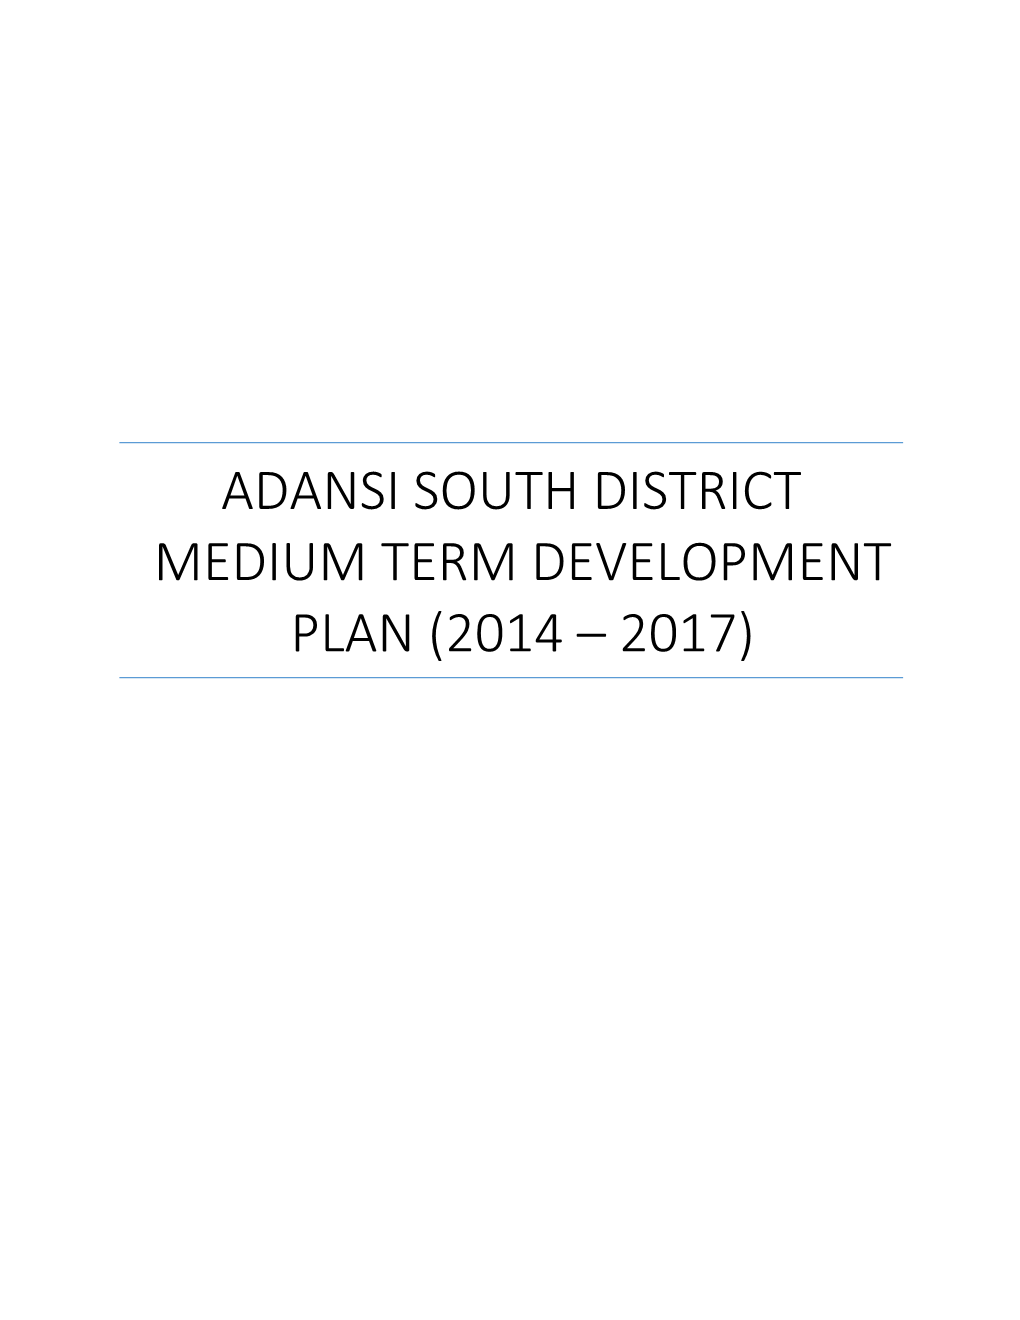 Adansi South District Medium Term Development Plan (2014 – 2017)